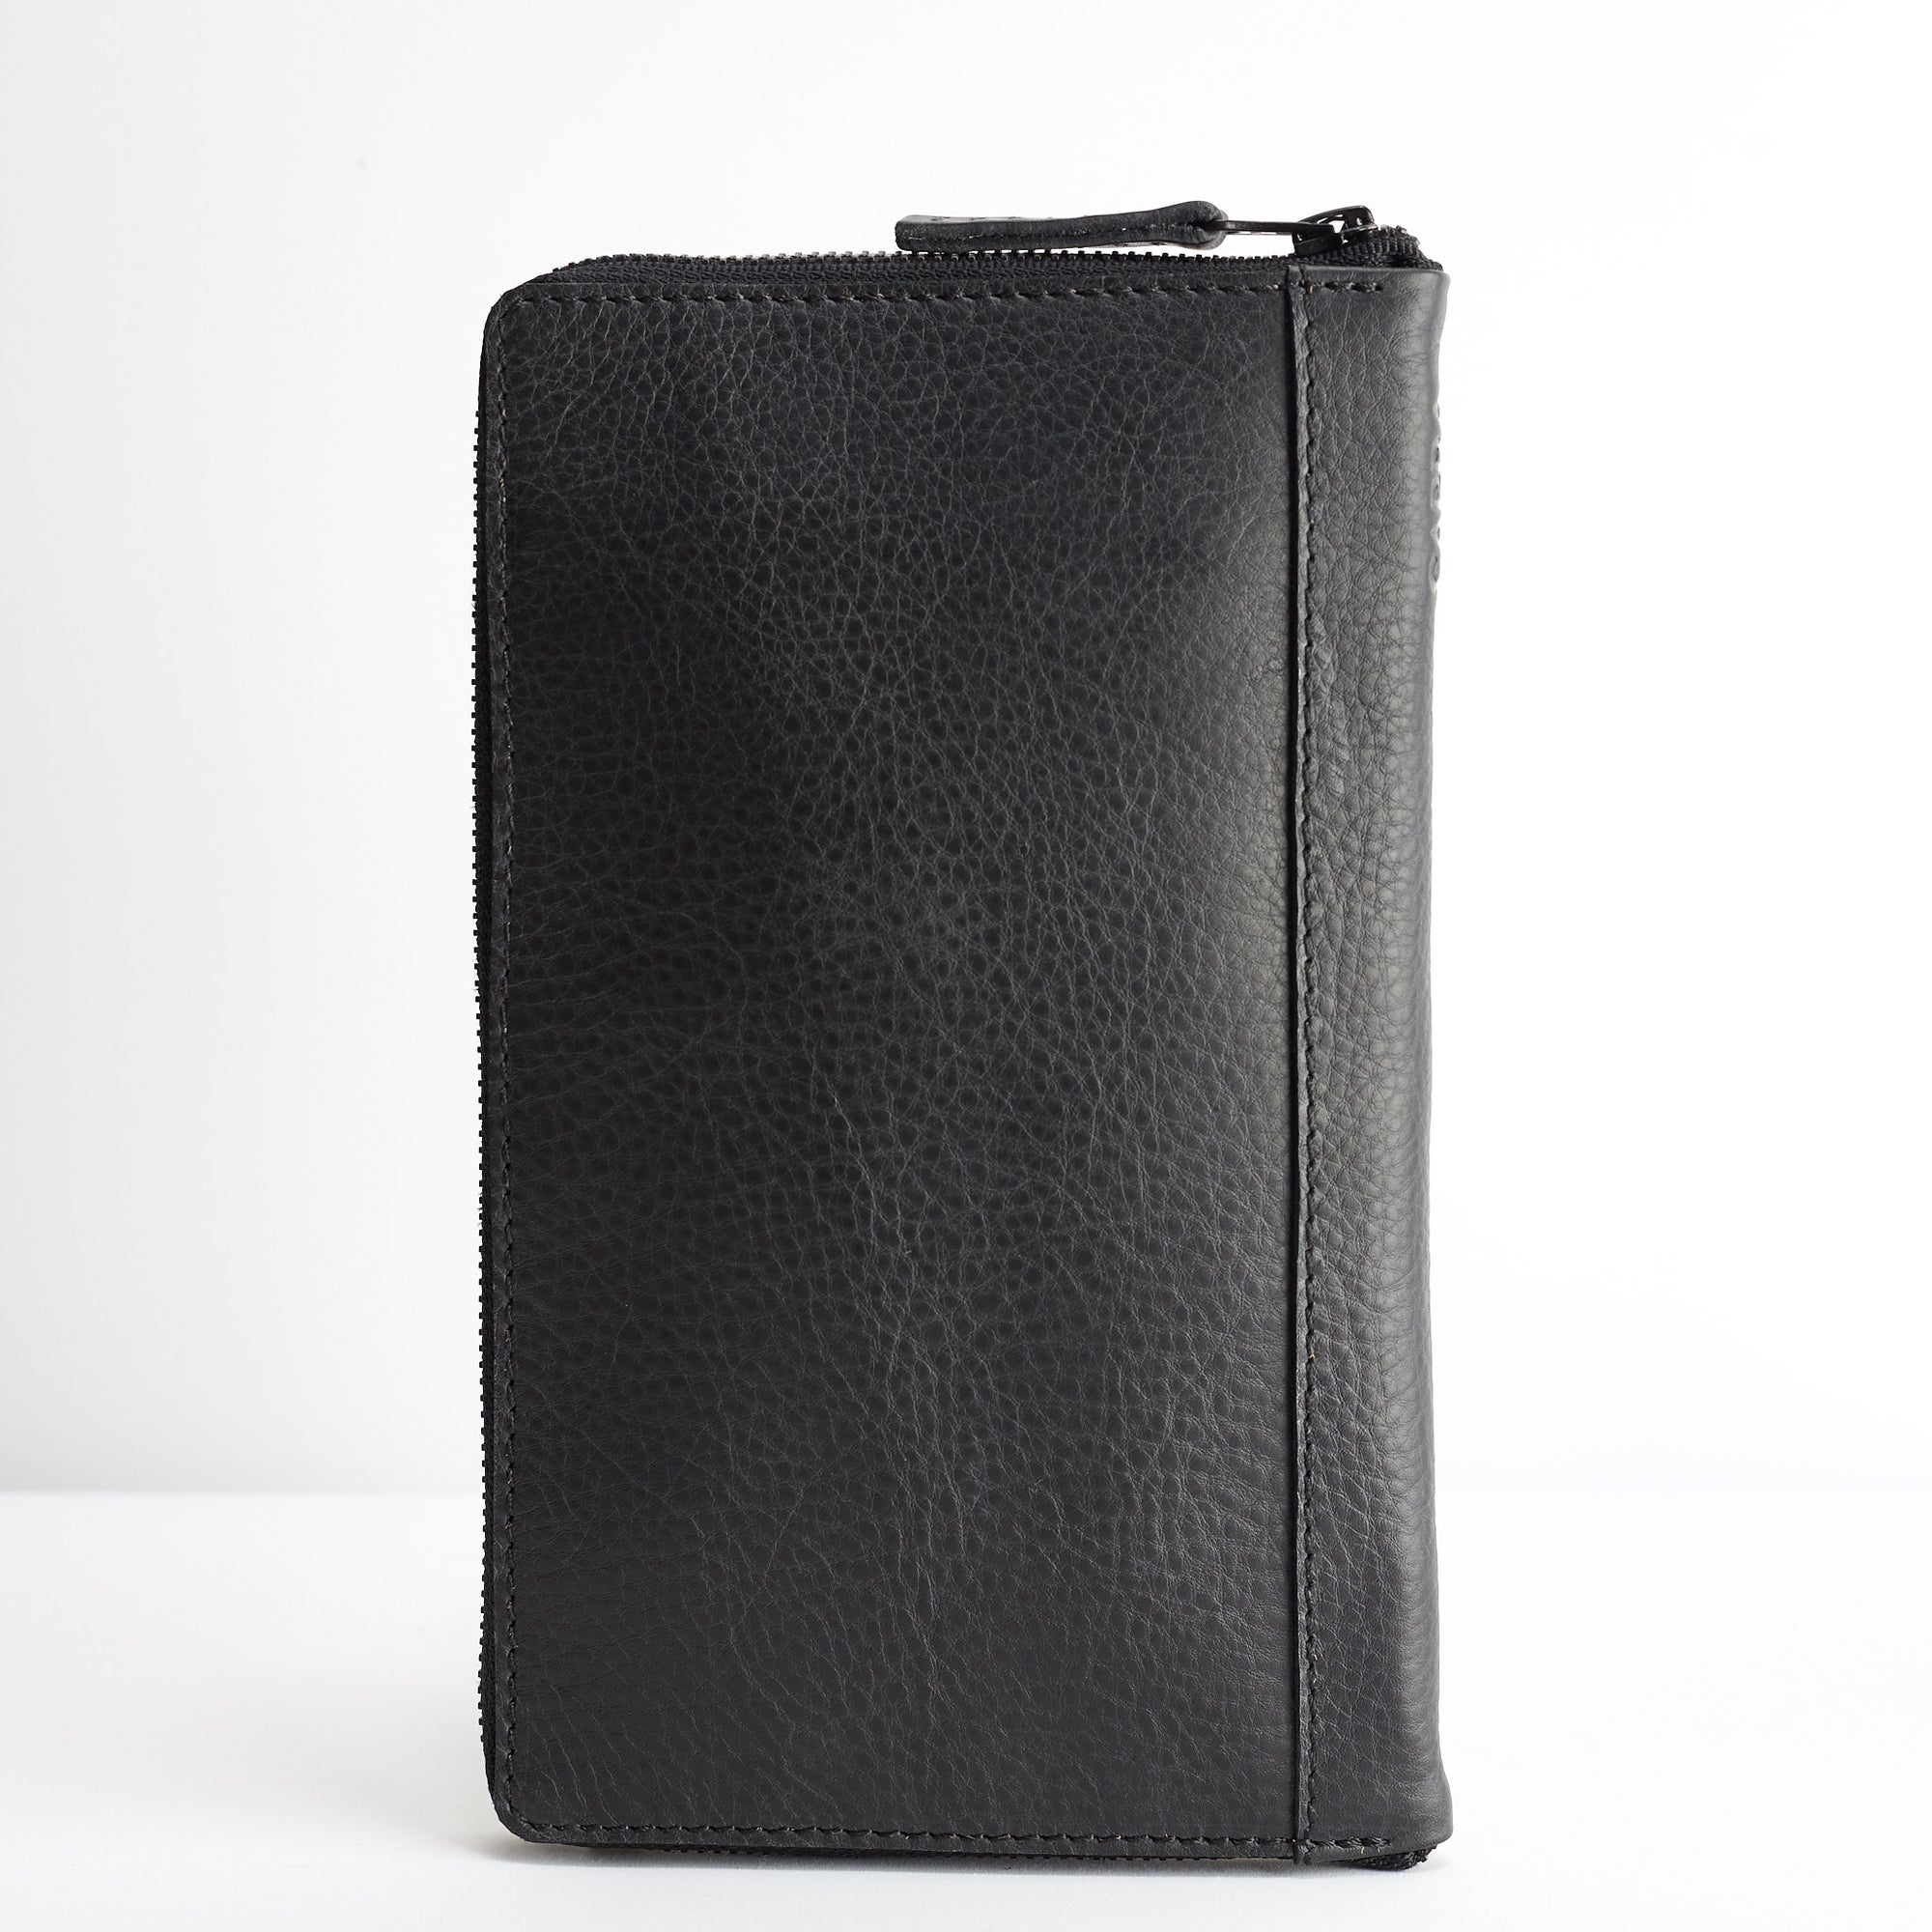 Back. Black Passport Holder for travelers, document organizer, travel journal by Capra Leather